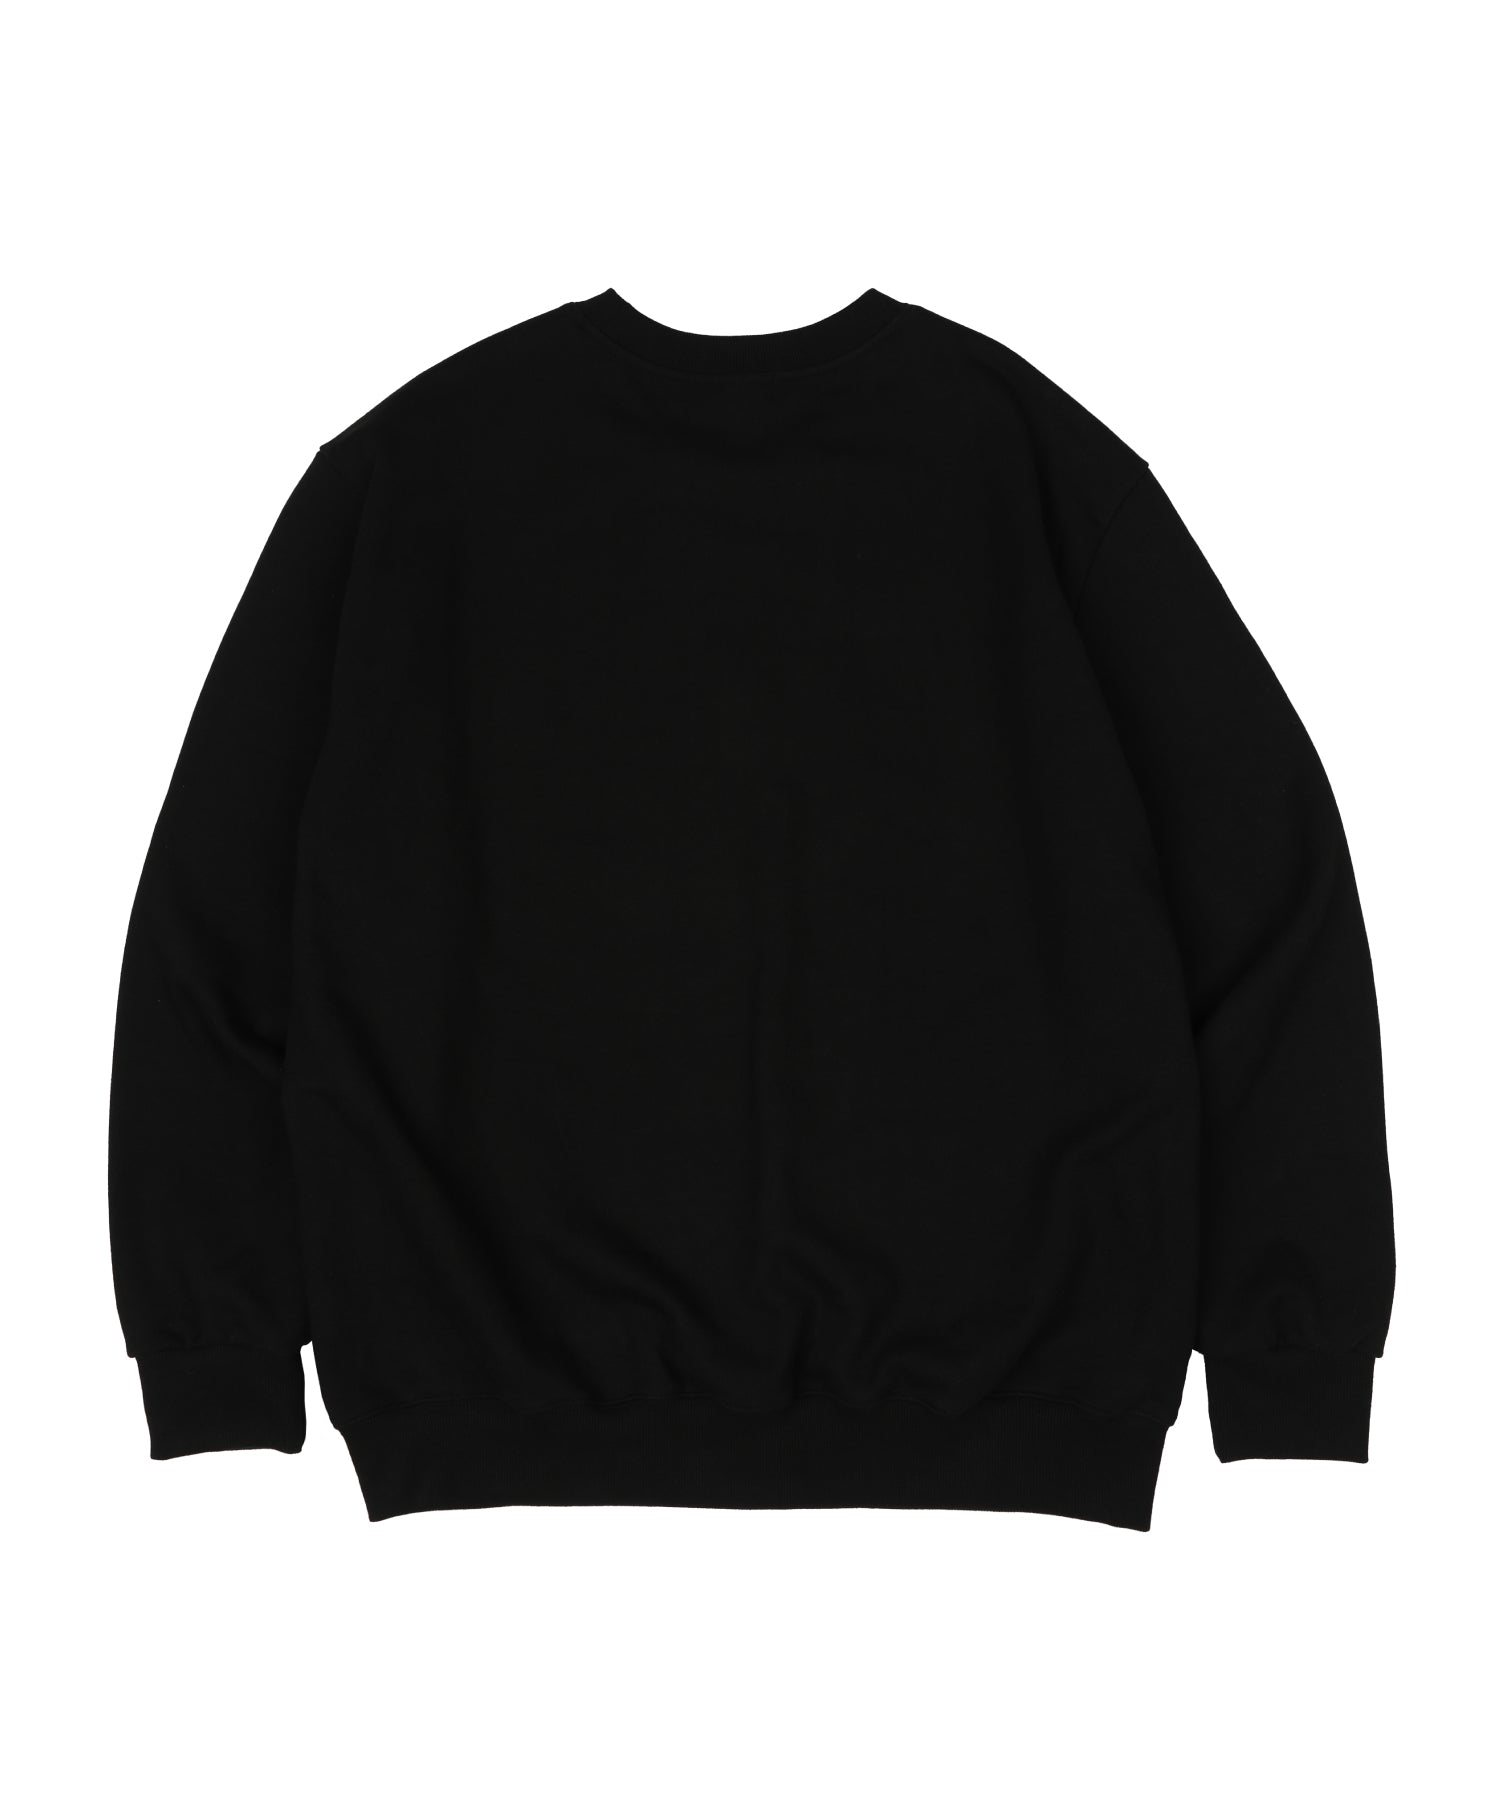 Infinite Hearts Sweatshirt - Black